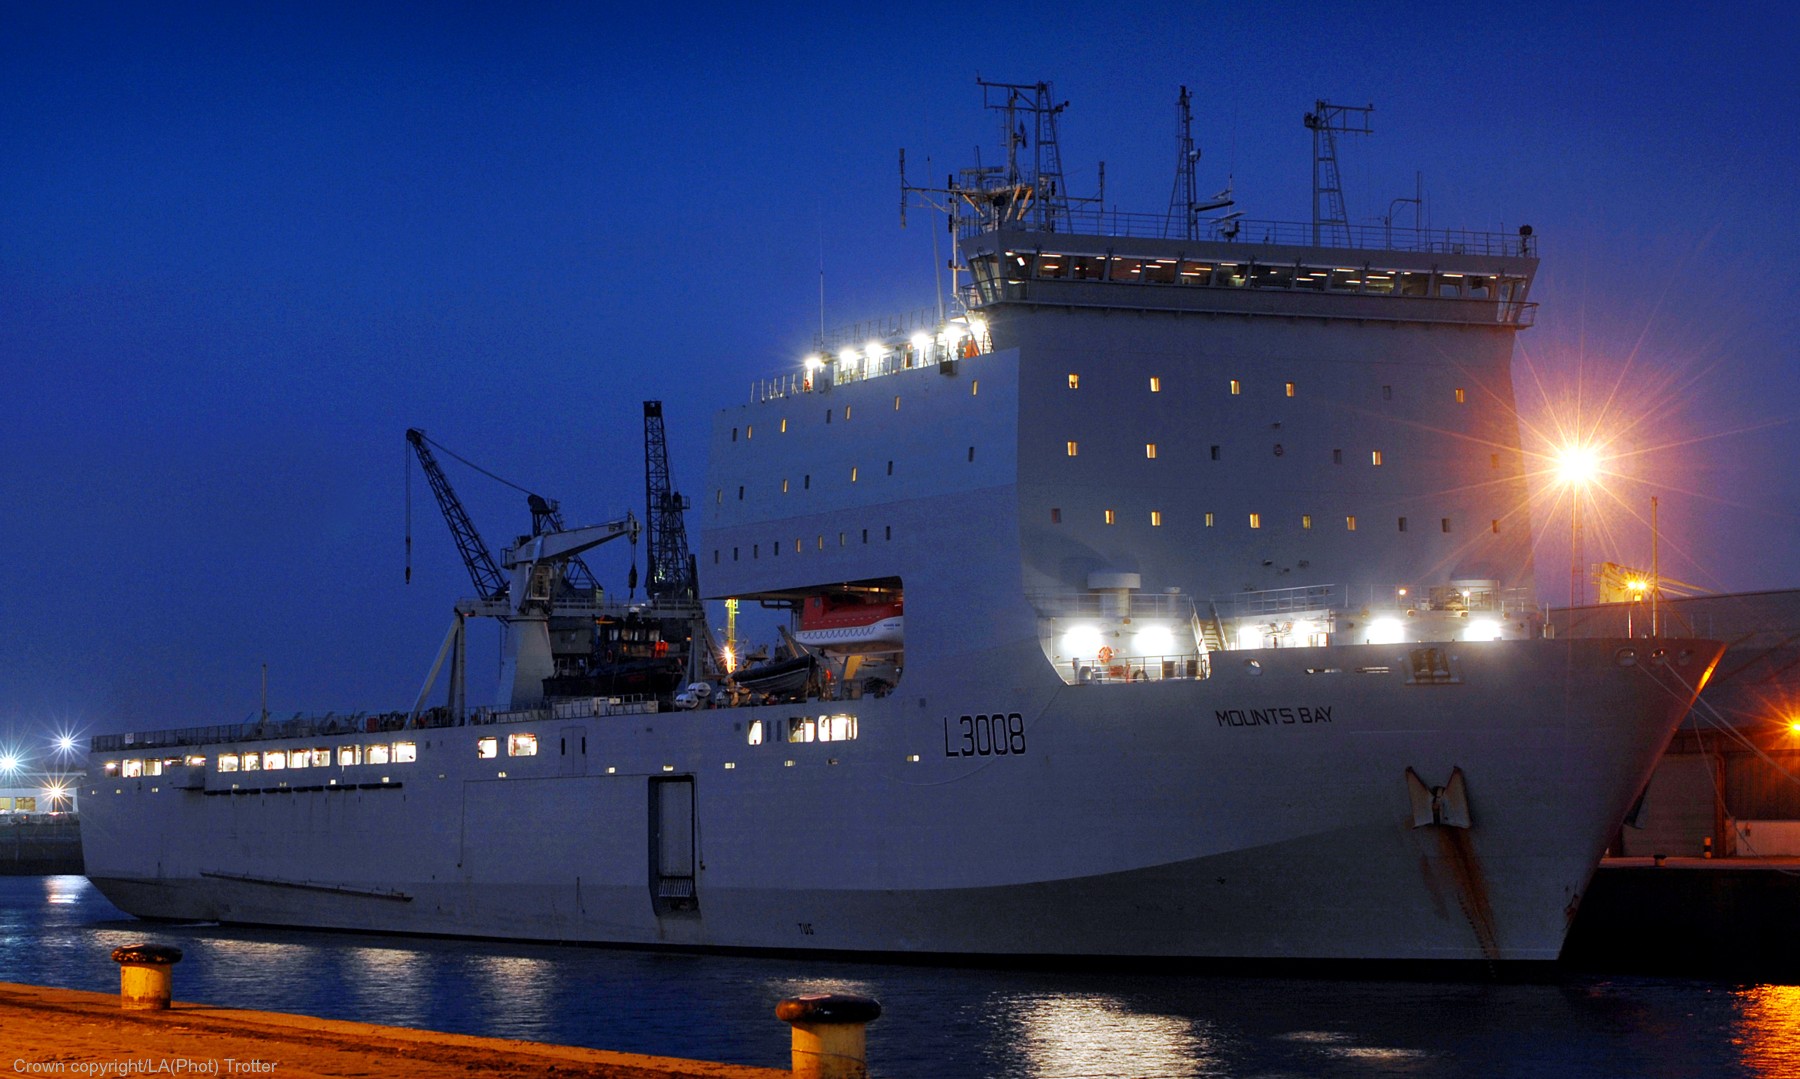 l 3008 rfa mounts bay amphibious dock landing ship transport royal fleet auxilary navy 02